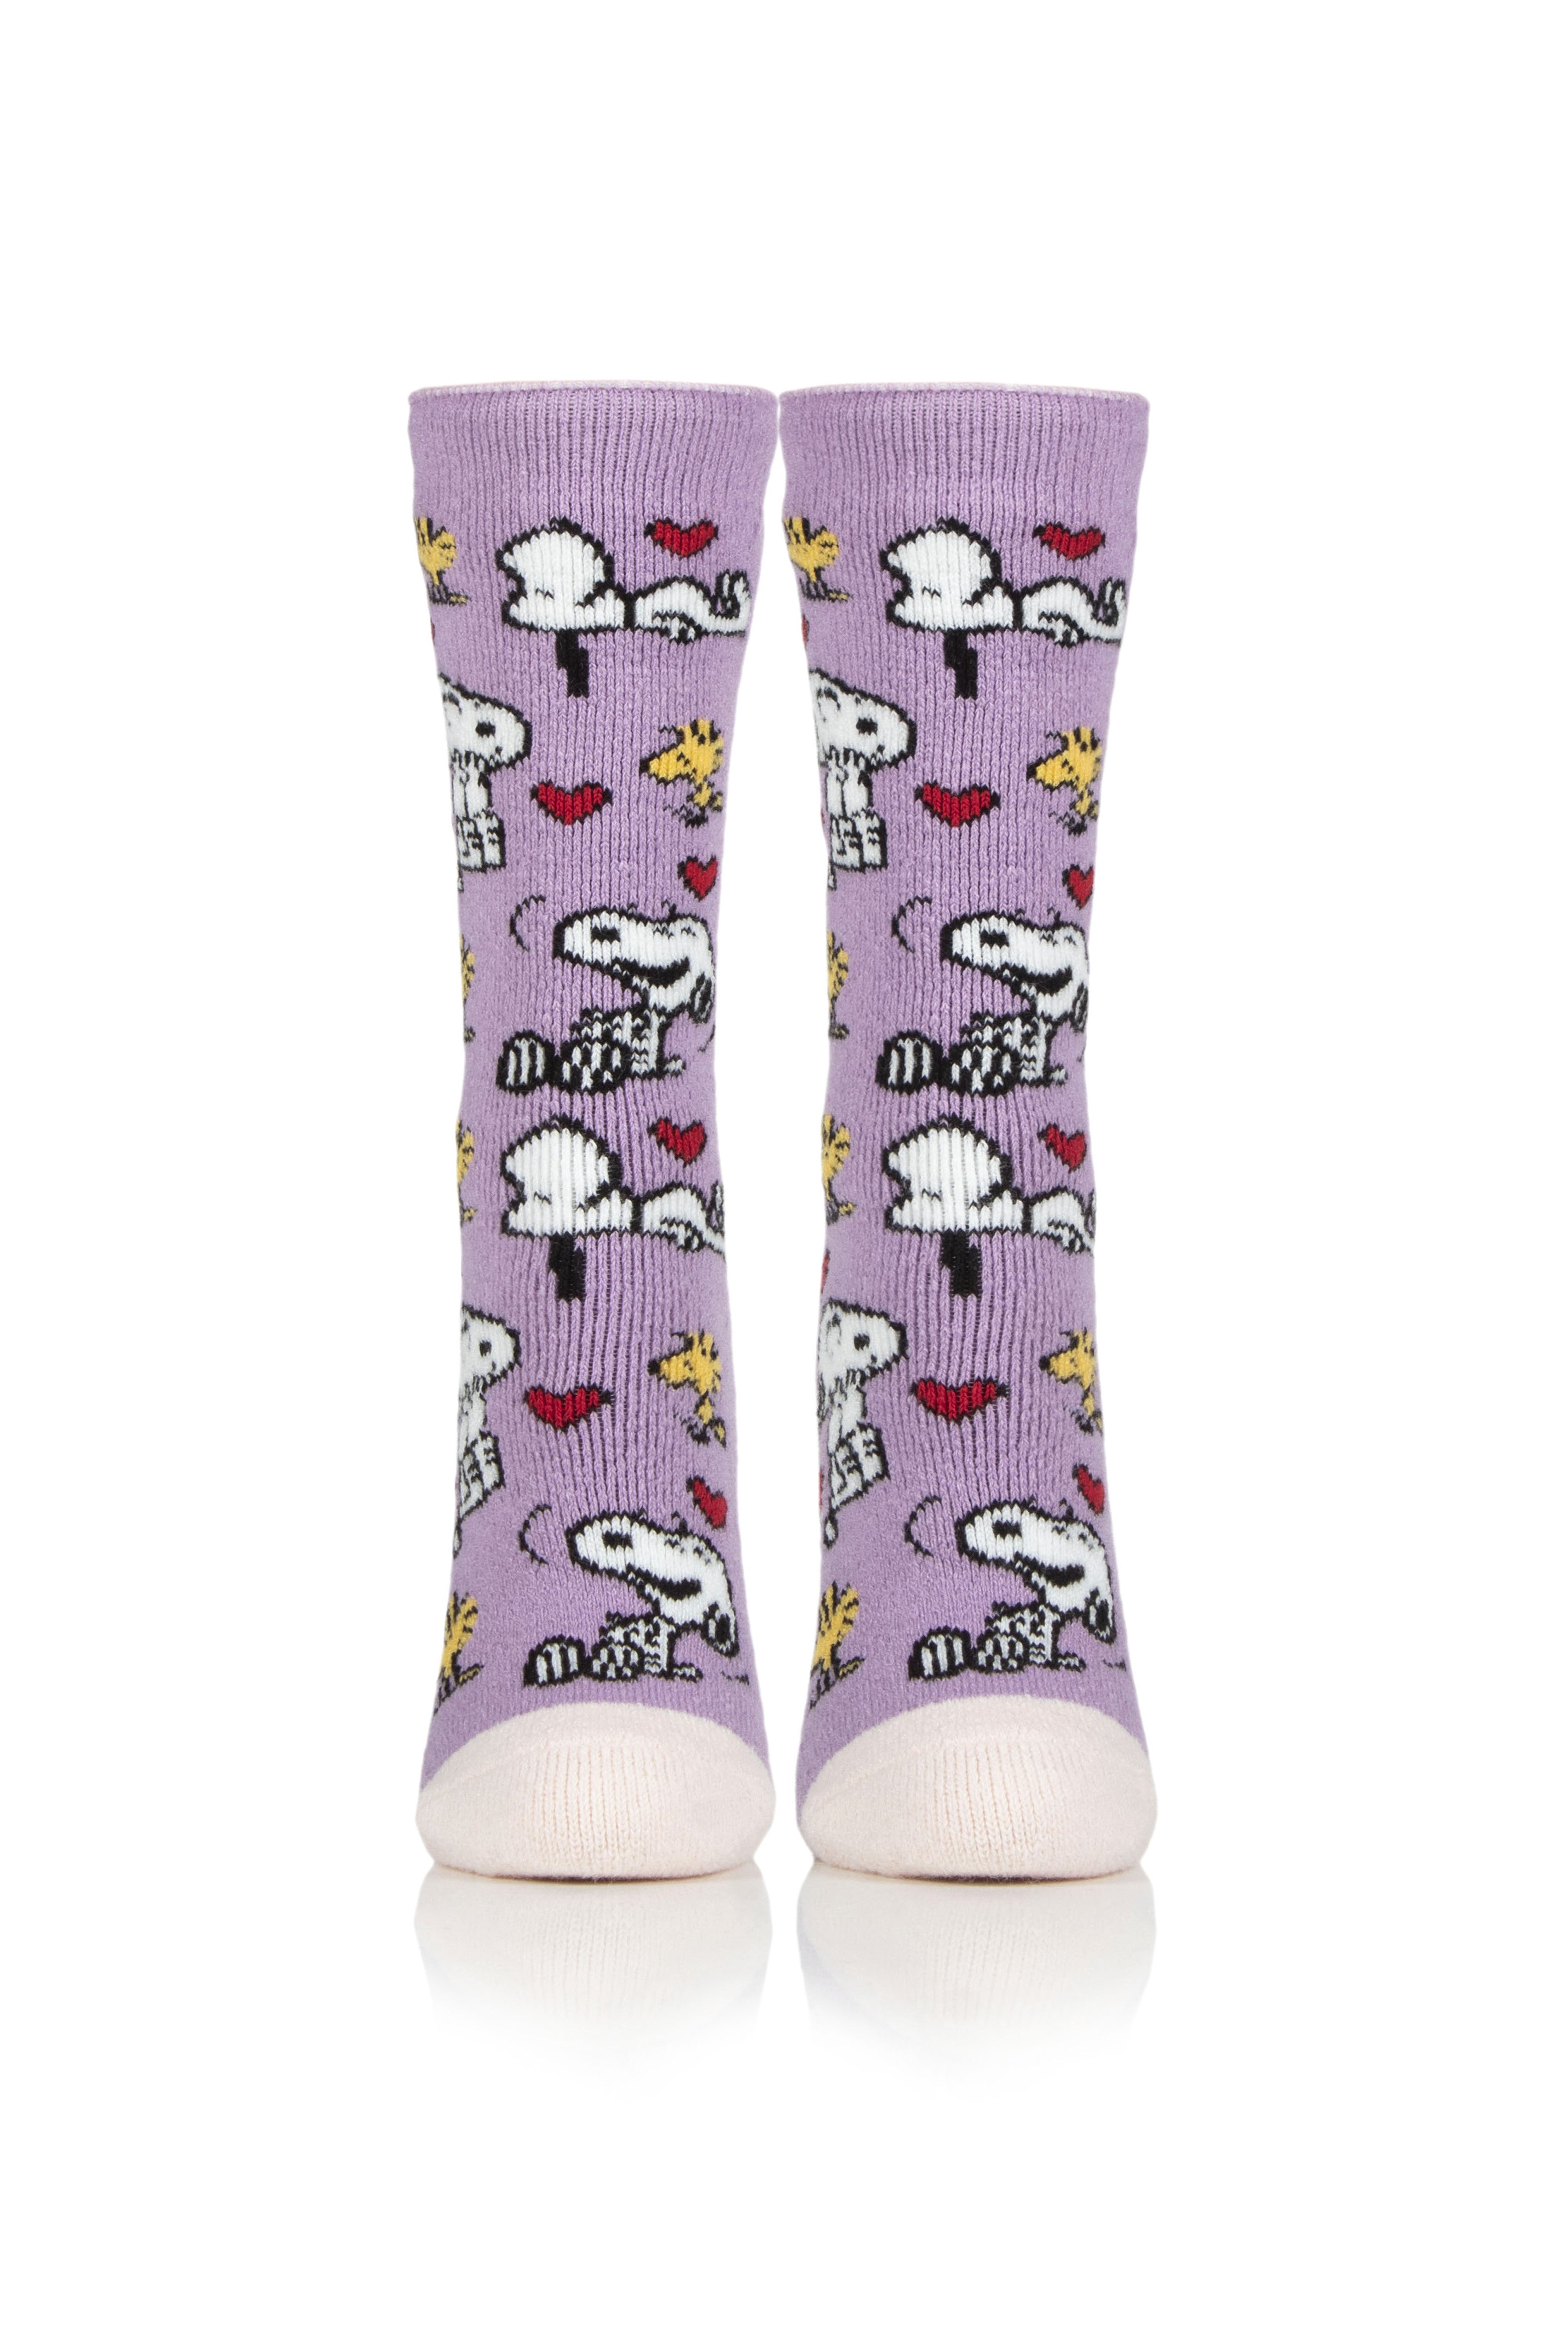 HEAT HOLDERS Lite Licensed Peanuts Character Socks-Snoopy-Womens 4-8